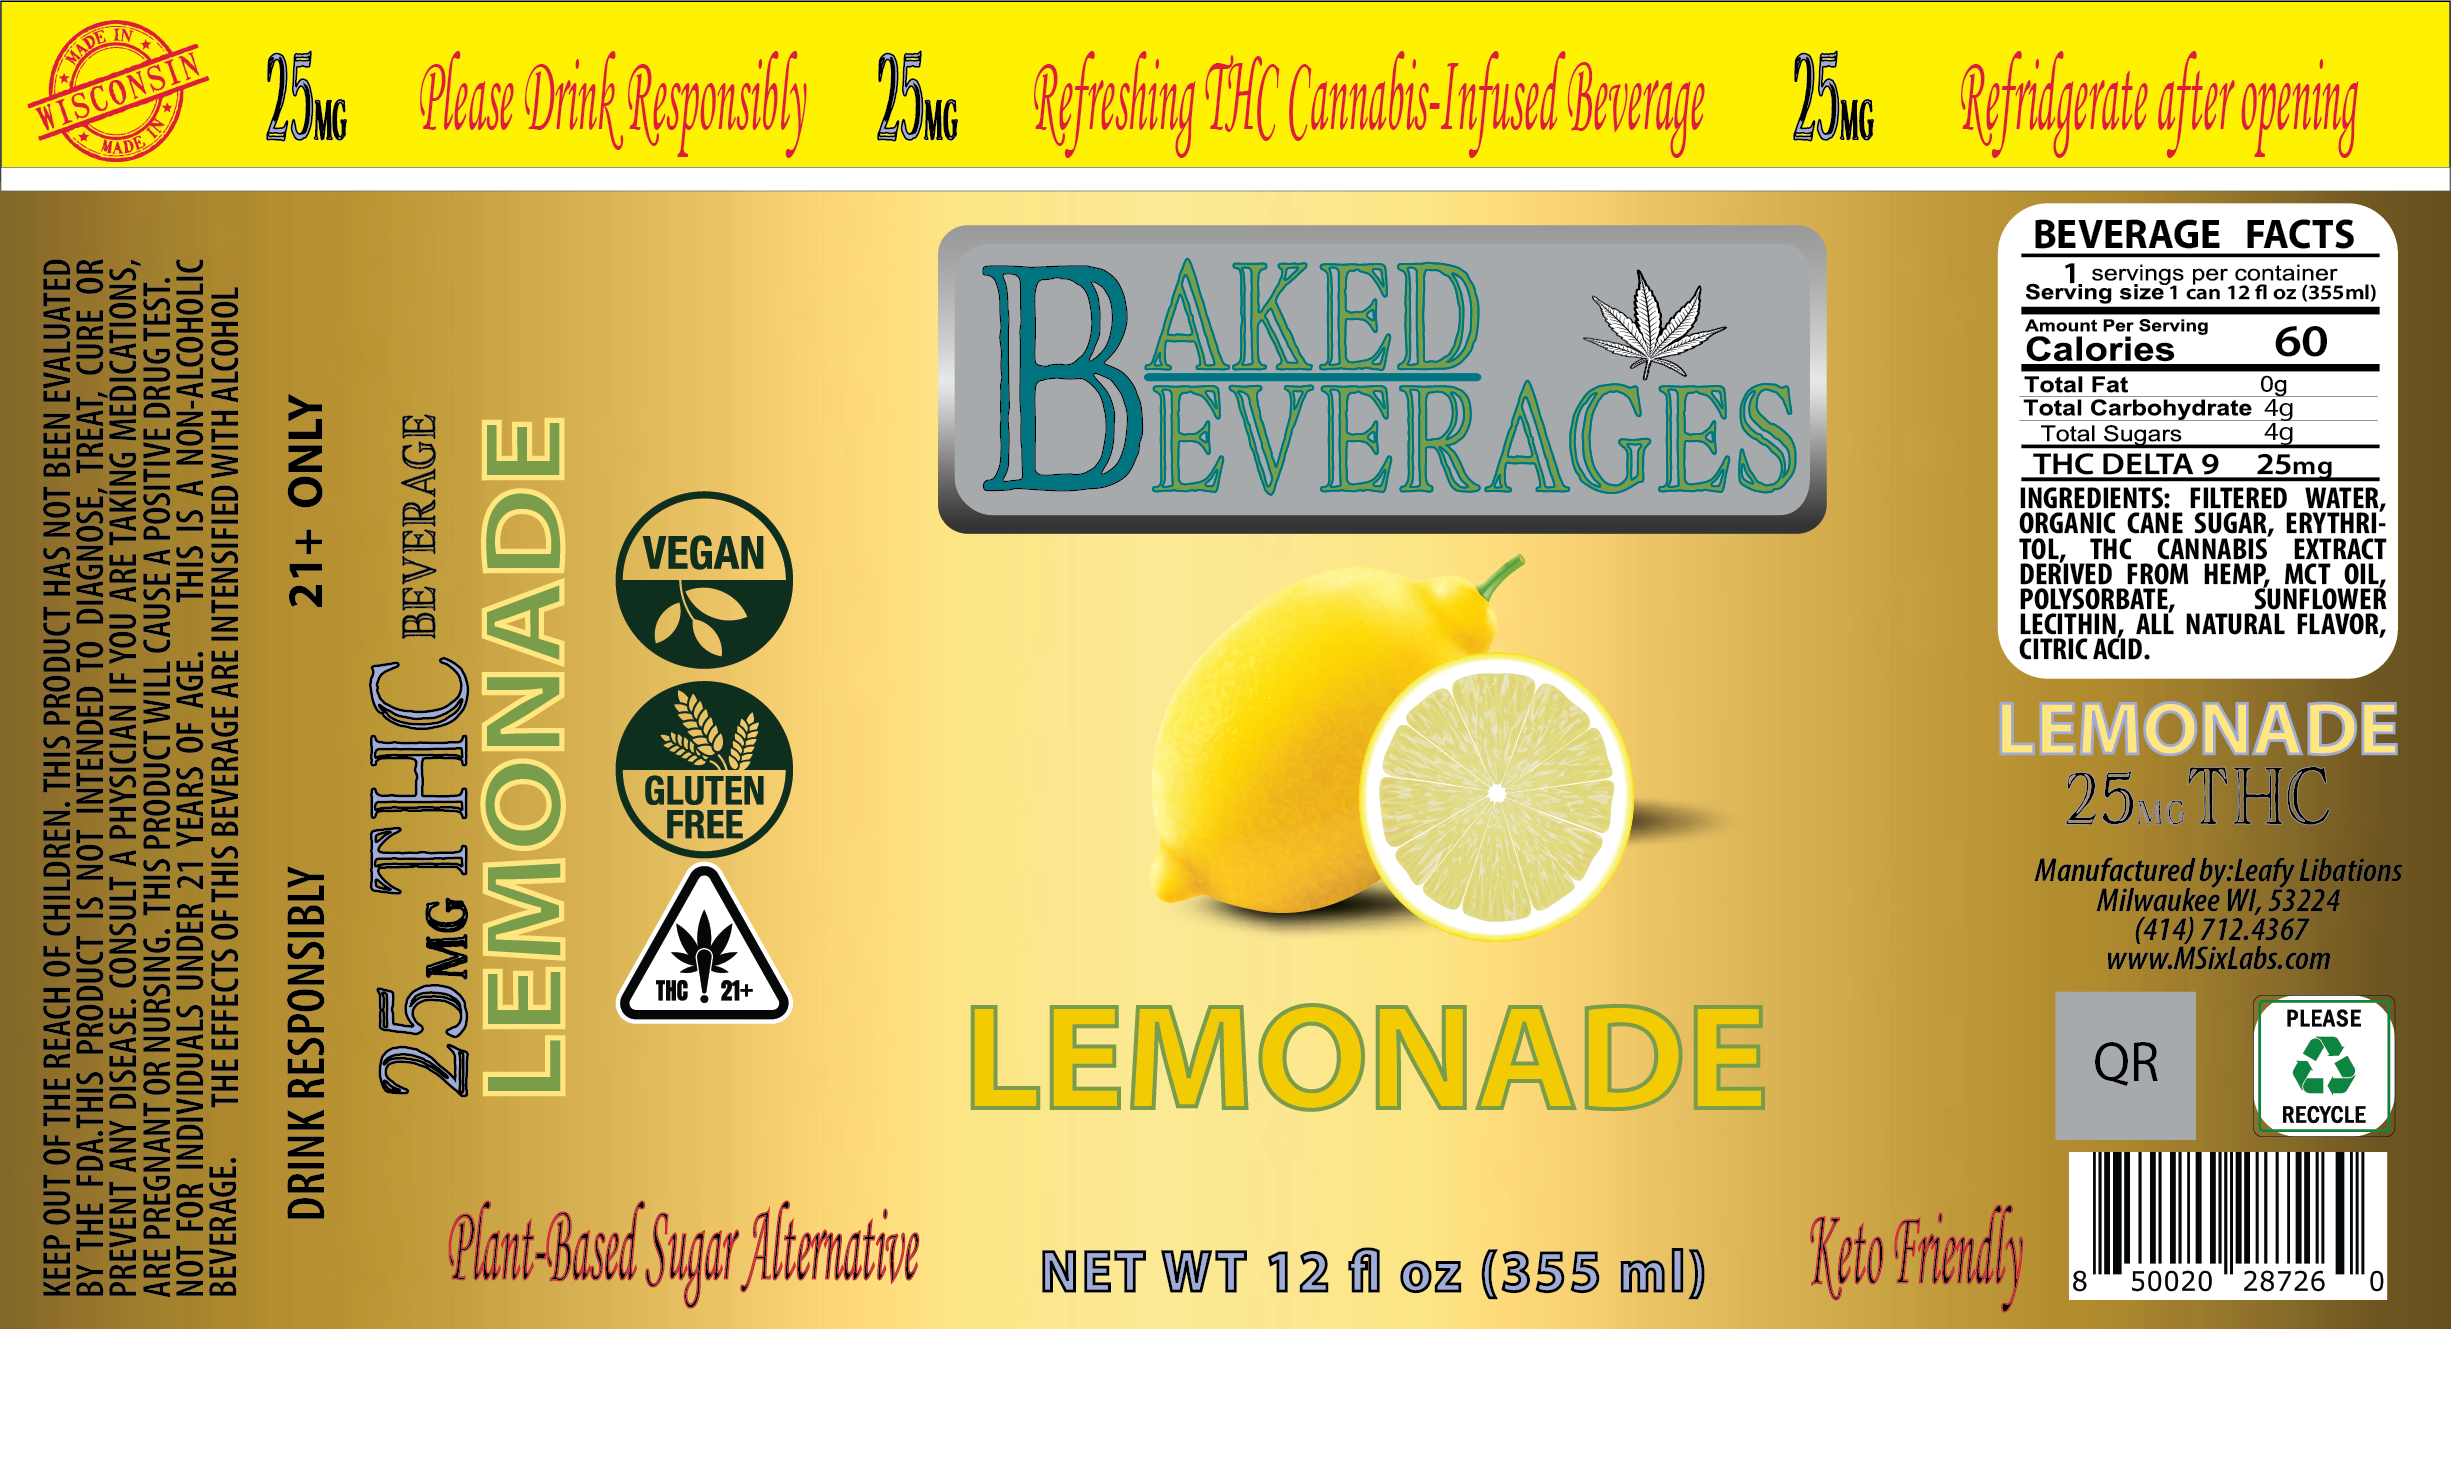 25mg THC Lemonade / 12oz can || Baked Beverages